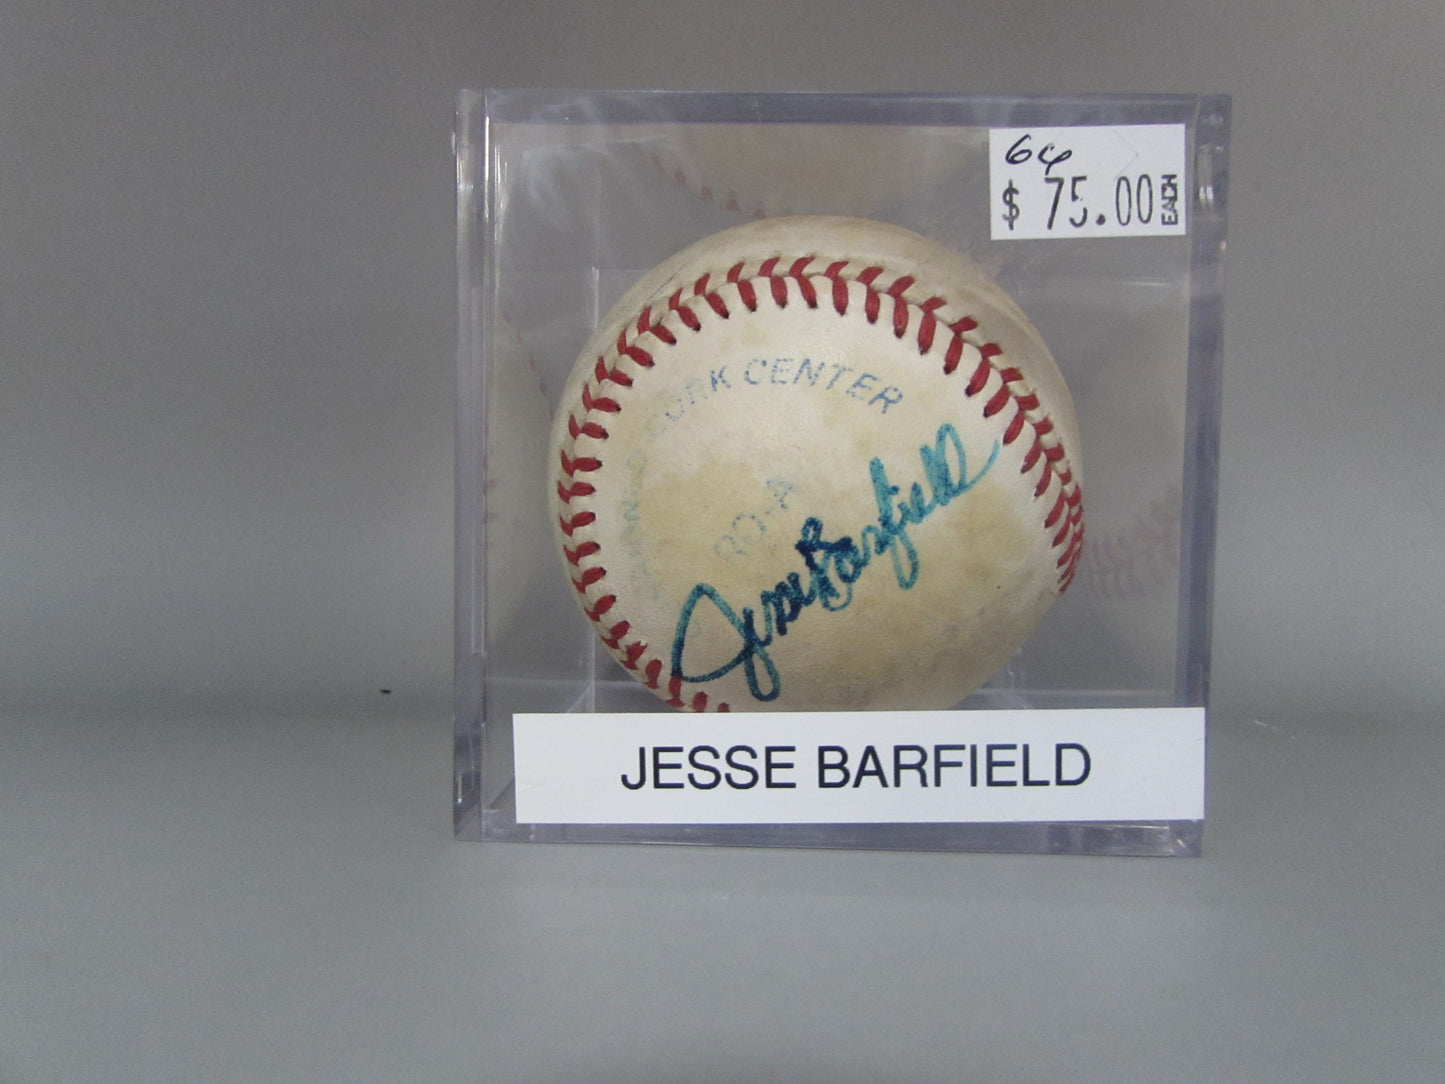 Jesse Barfield signed baseball